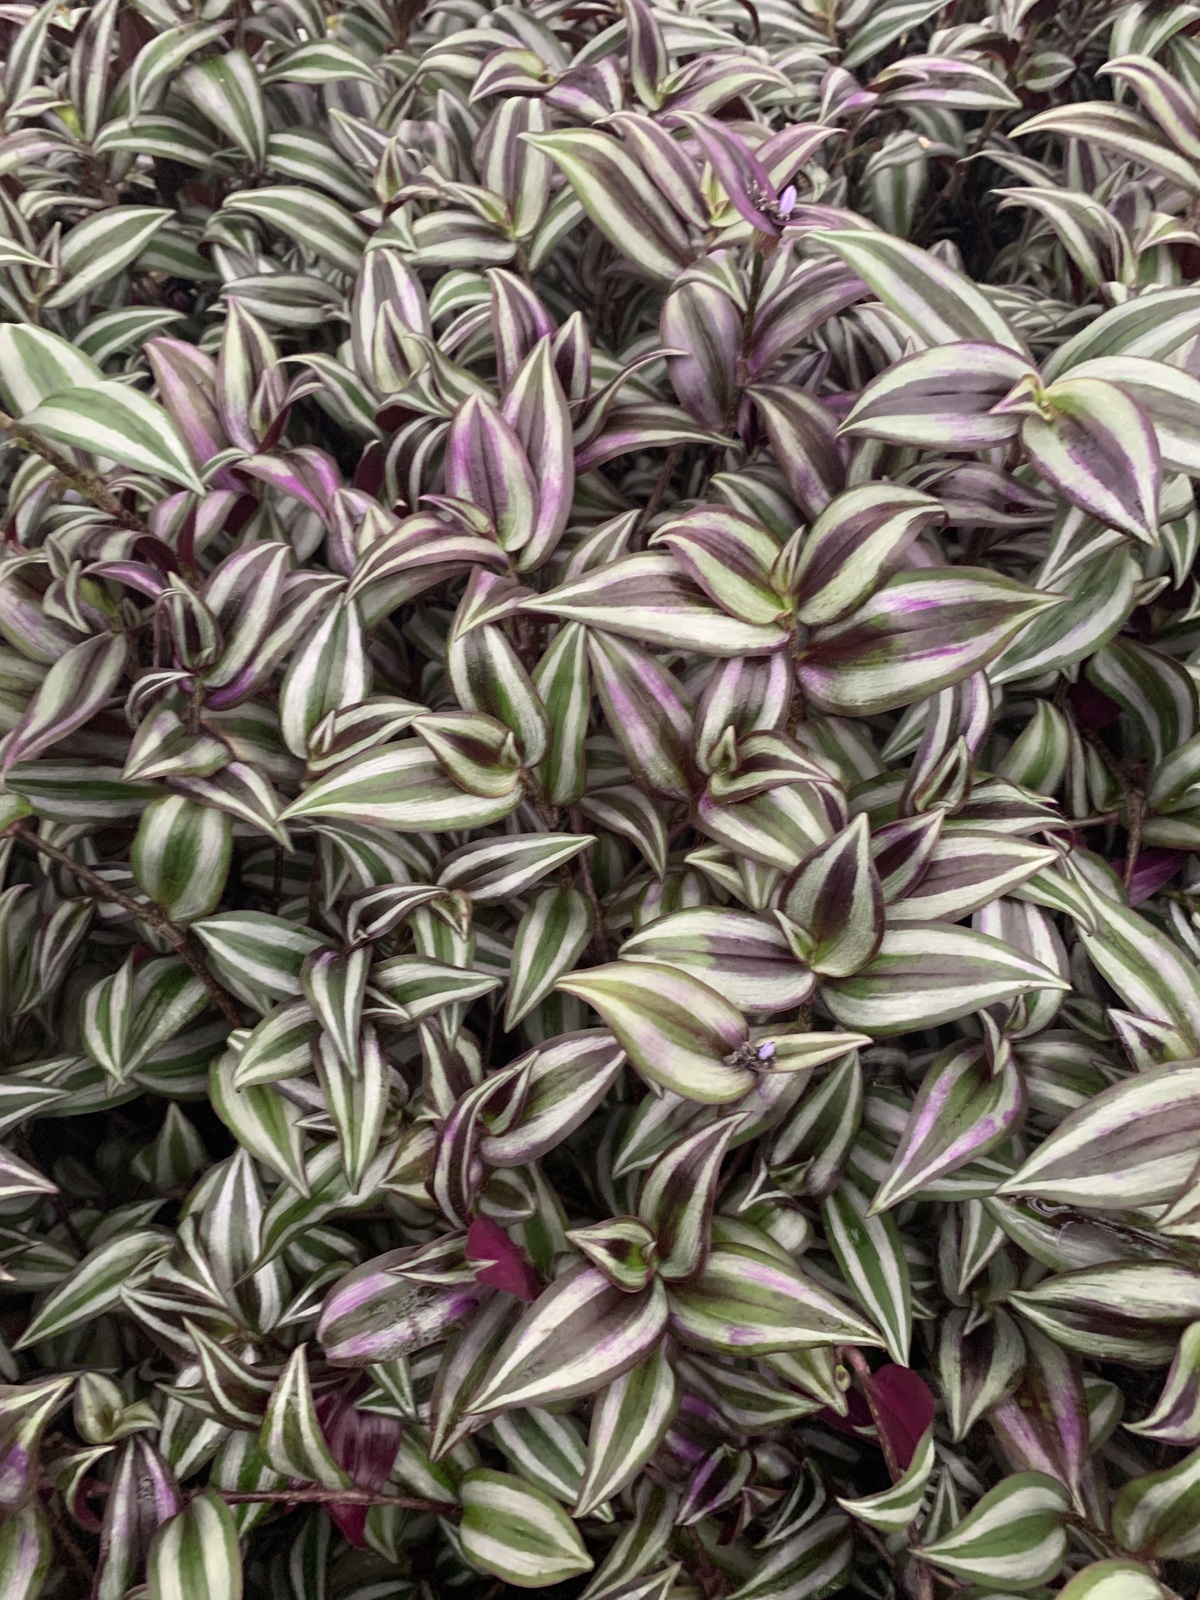 Zebrina (Purple Wandering Jew) plant